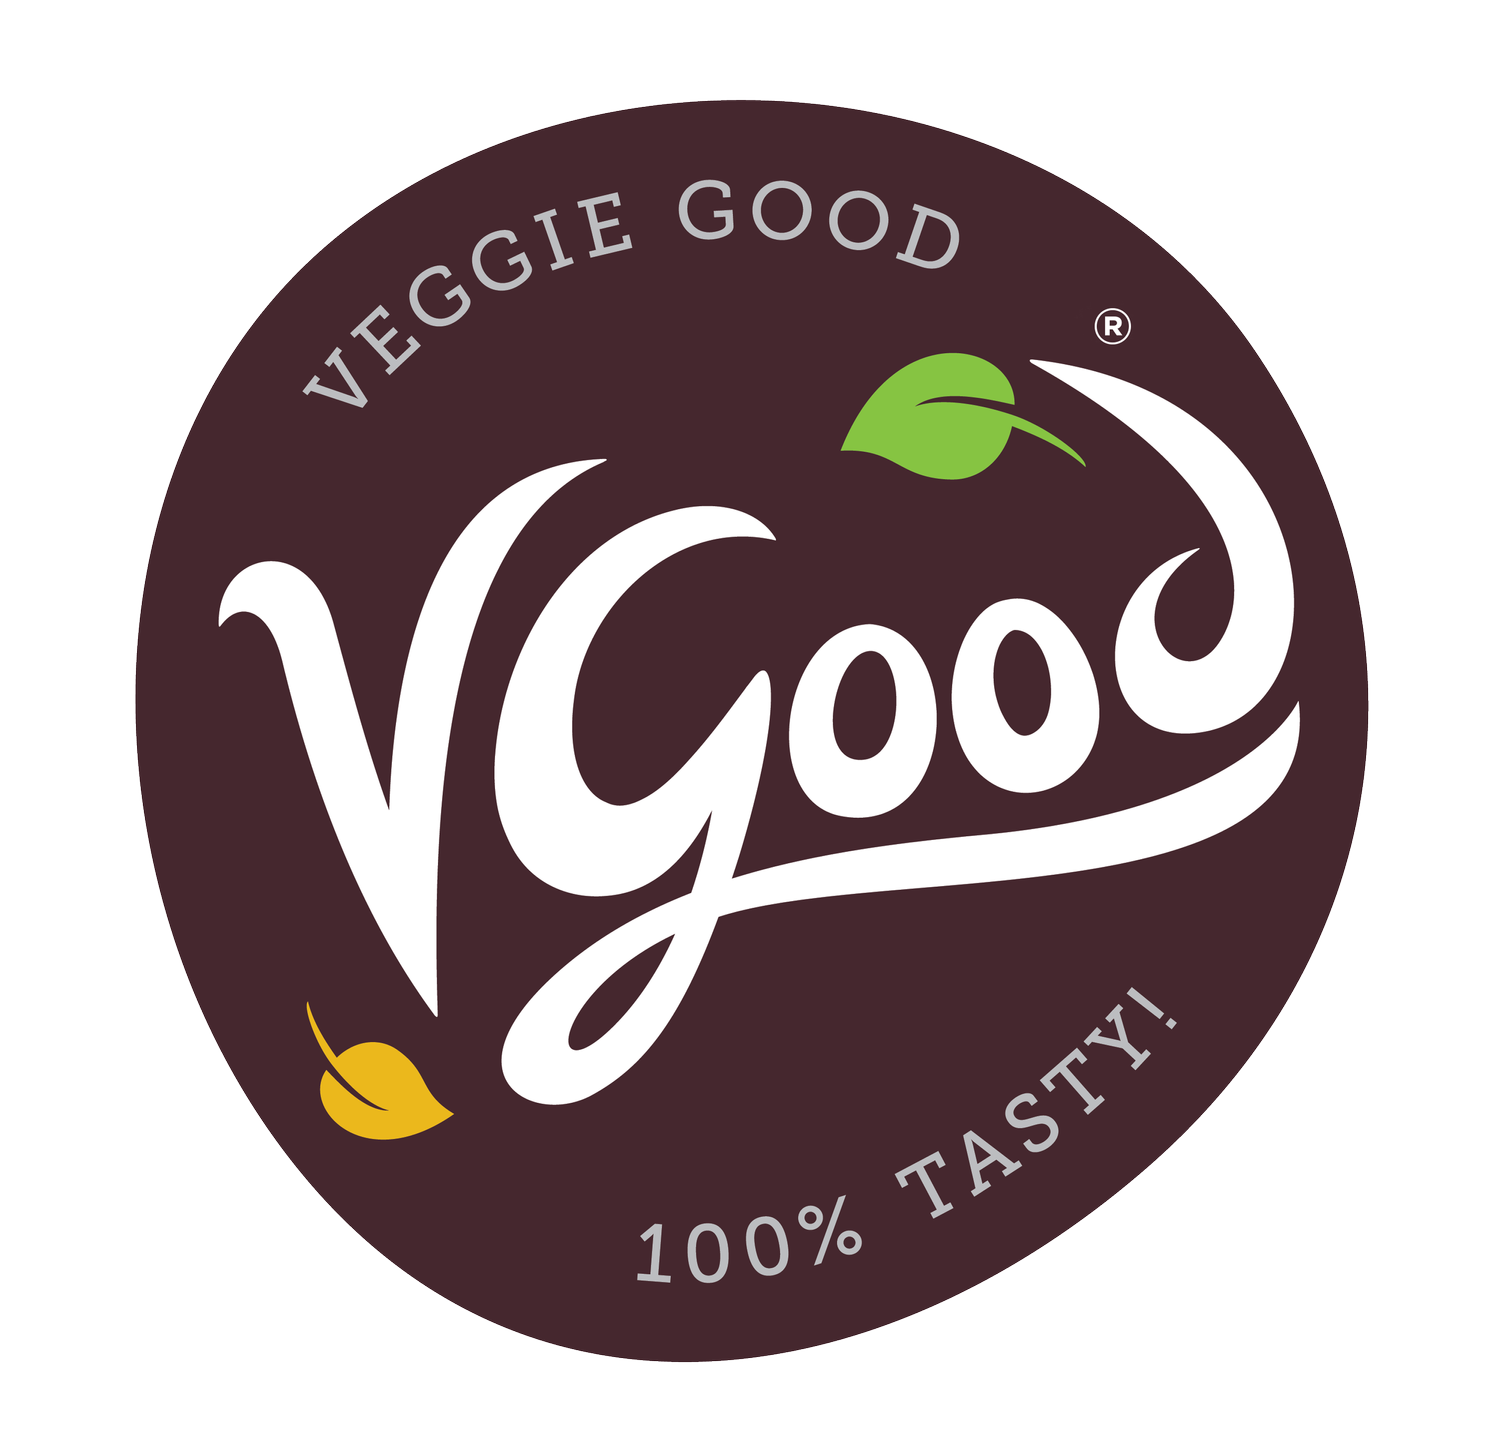 The VGood Company